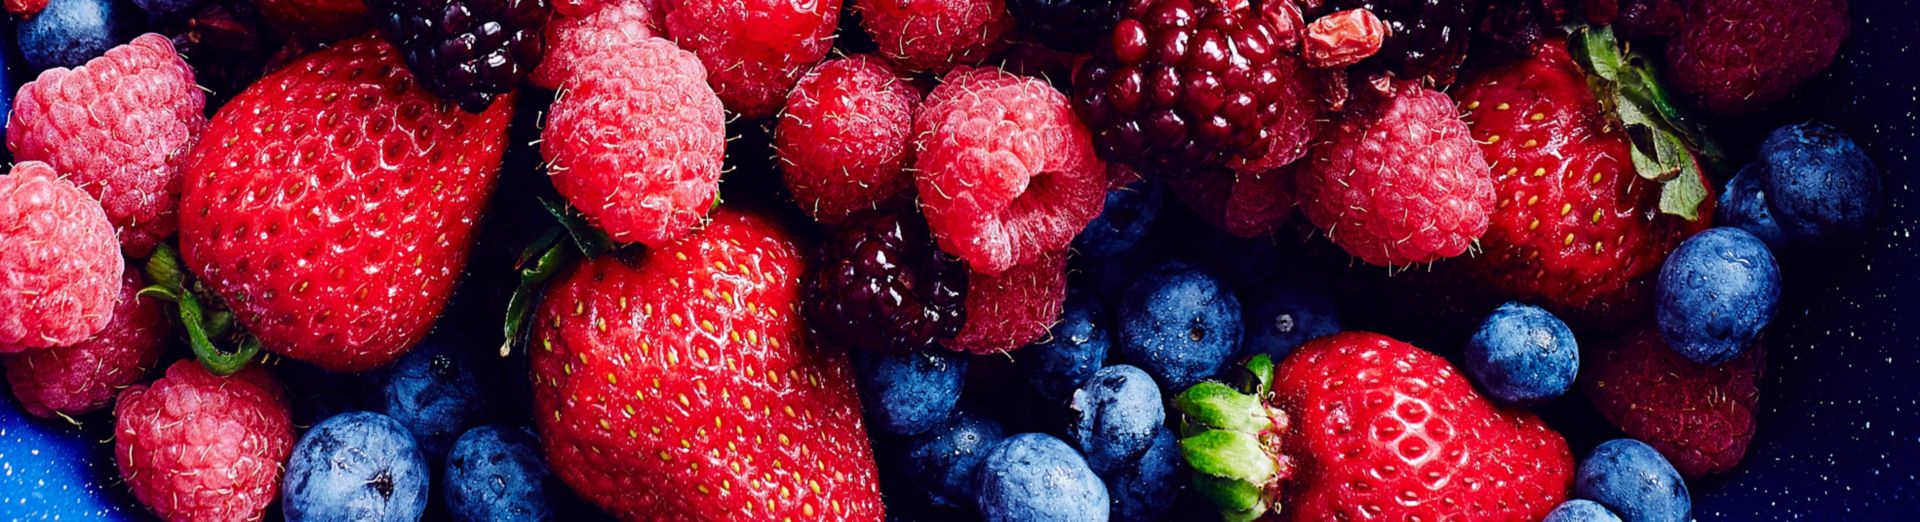 Image of a grocery store display of an abundance of strawberries, blackberries, blueberries, raspberries, and cranberries